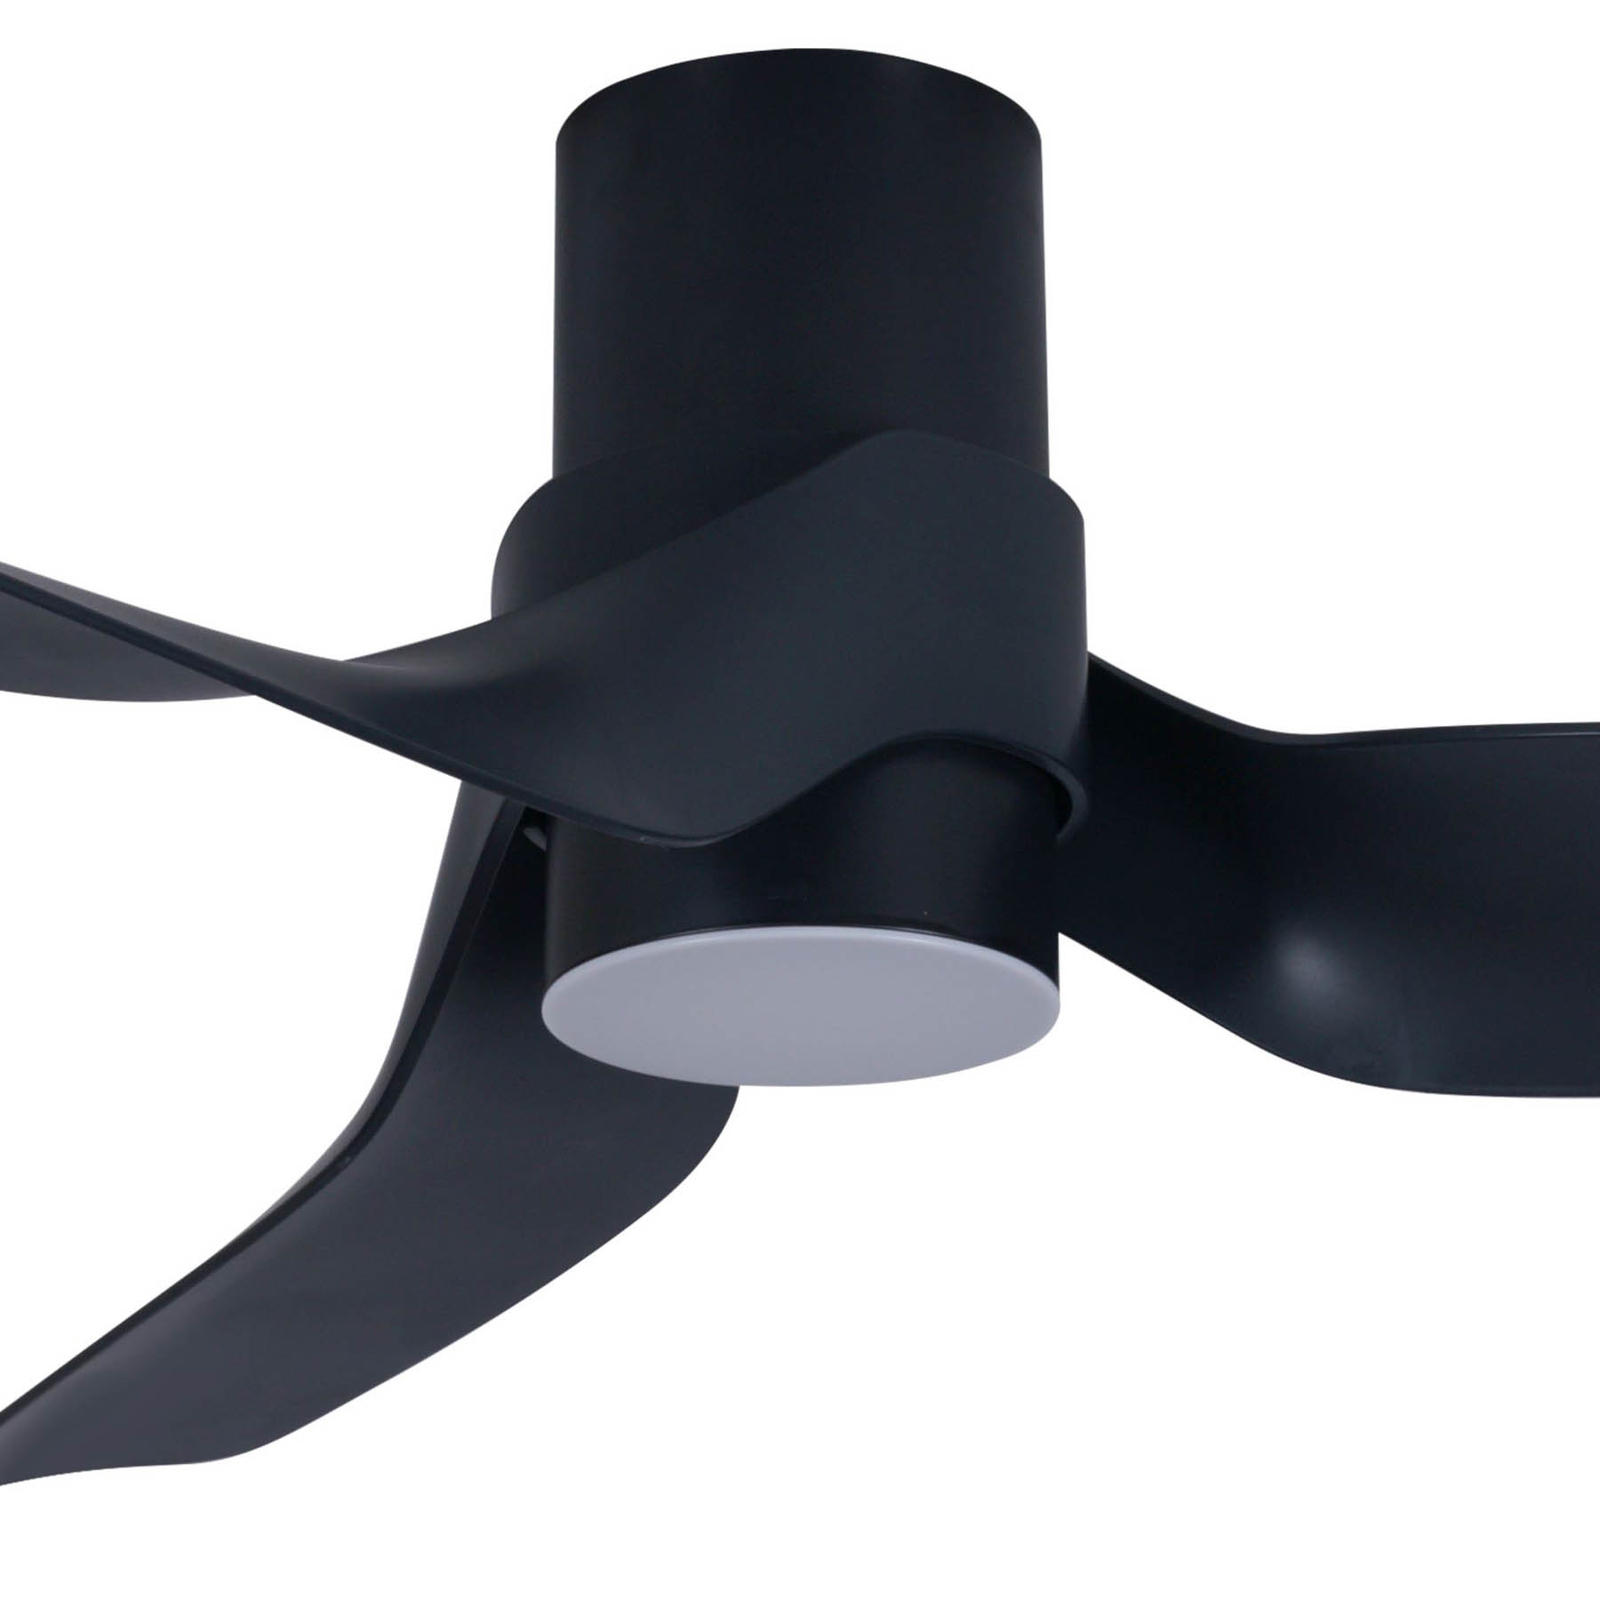 Beacon ceiling fan with light Nautica, black, quiet